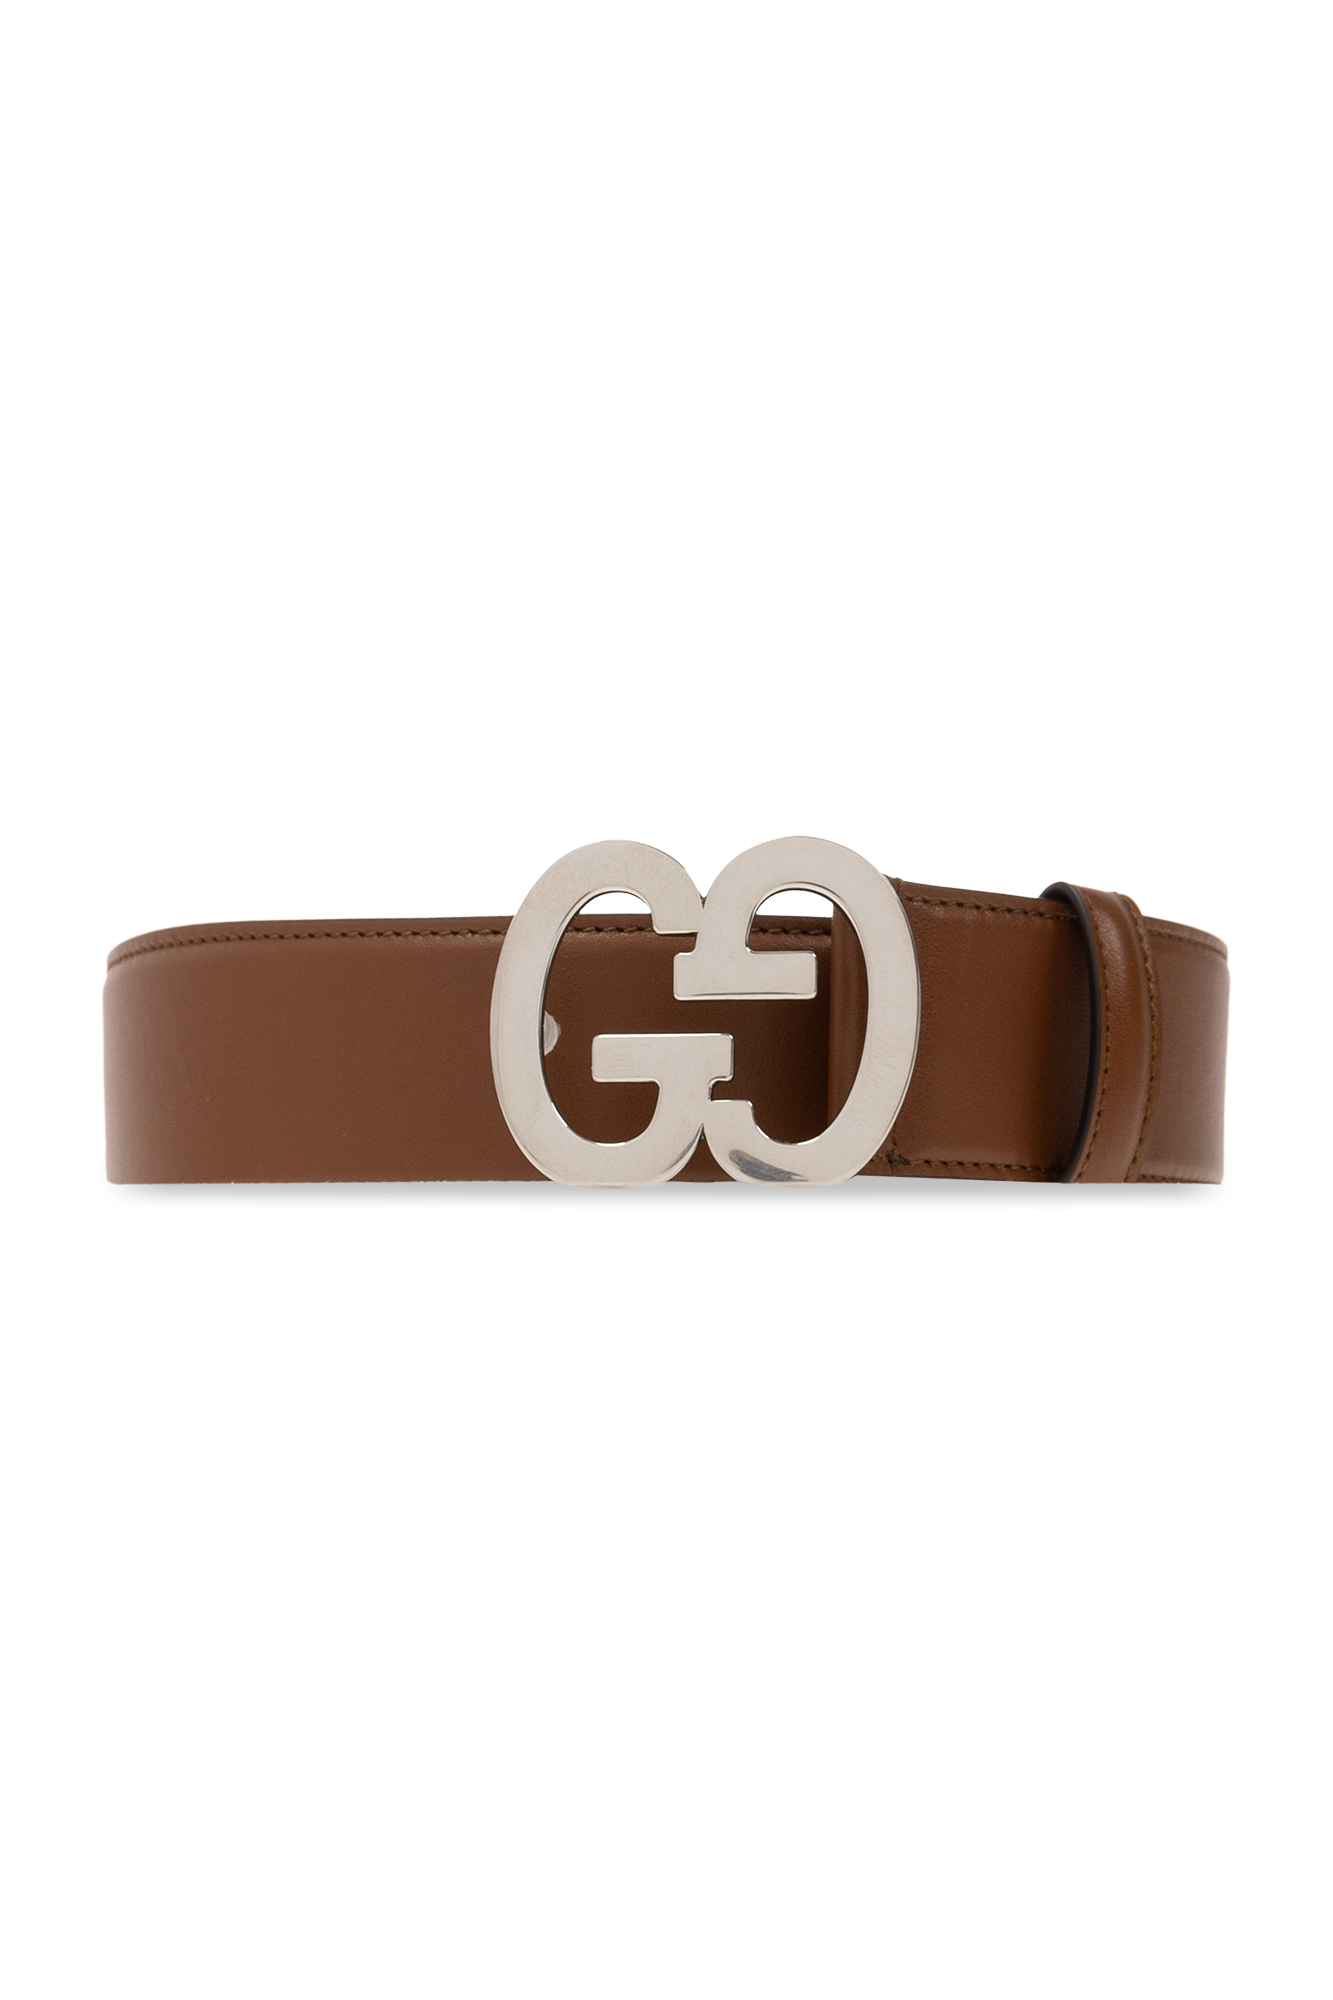 Gucci Belt with logo, Men's Accessories